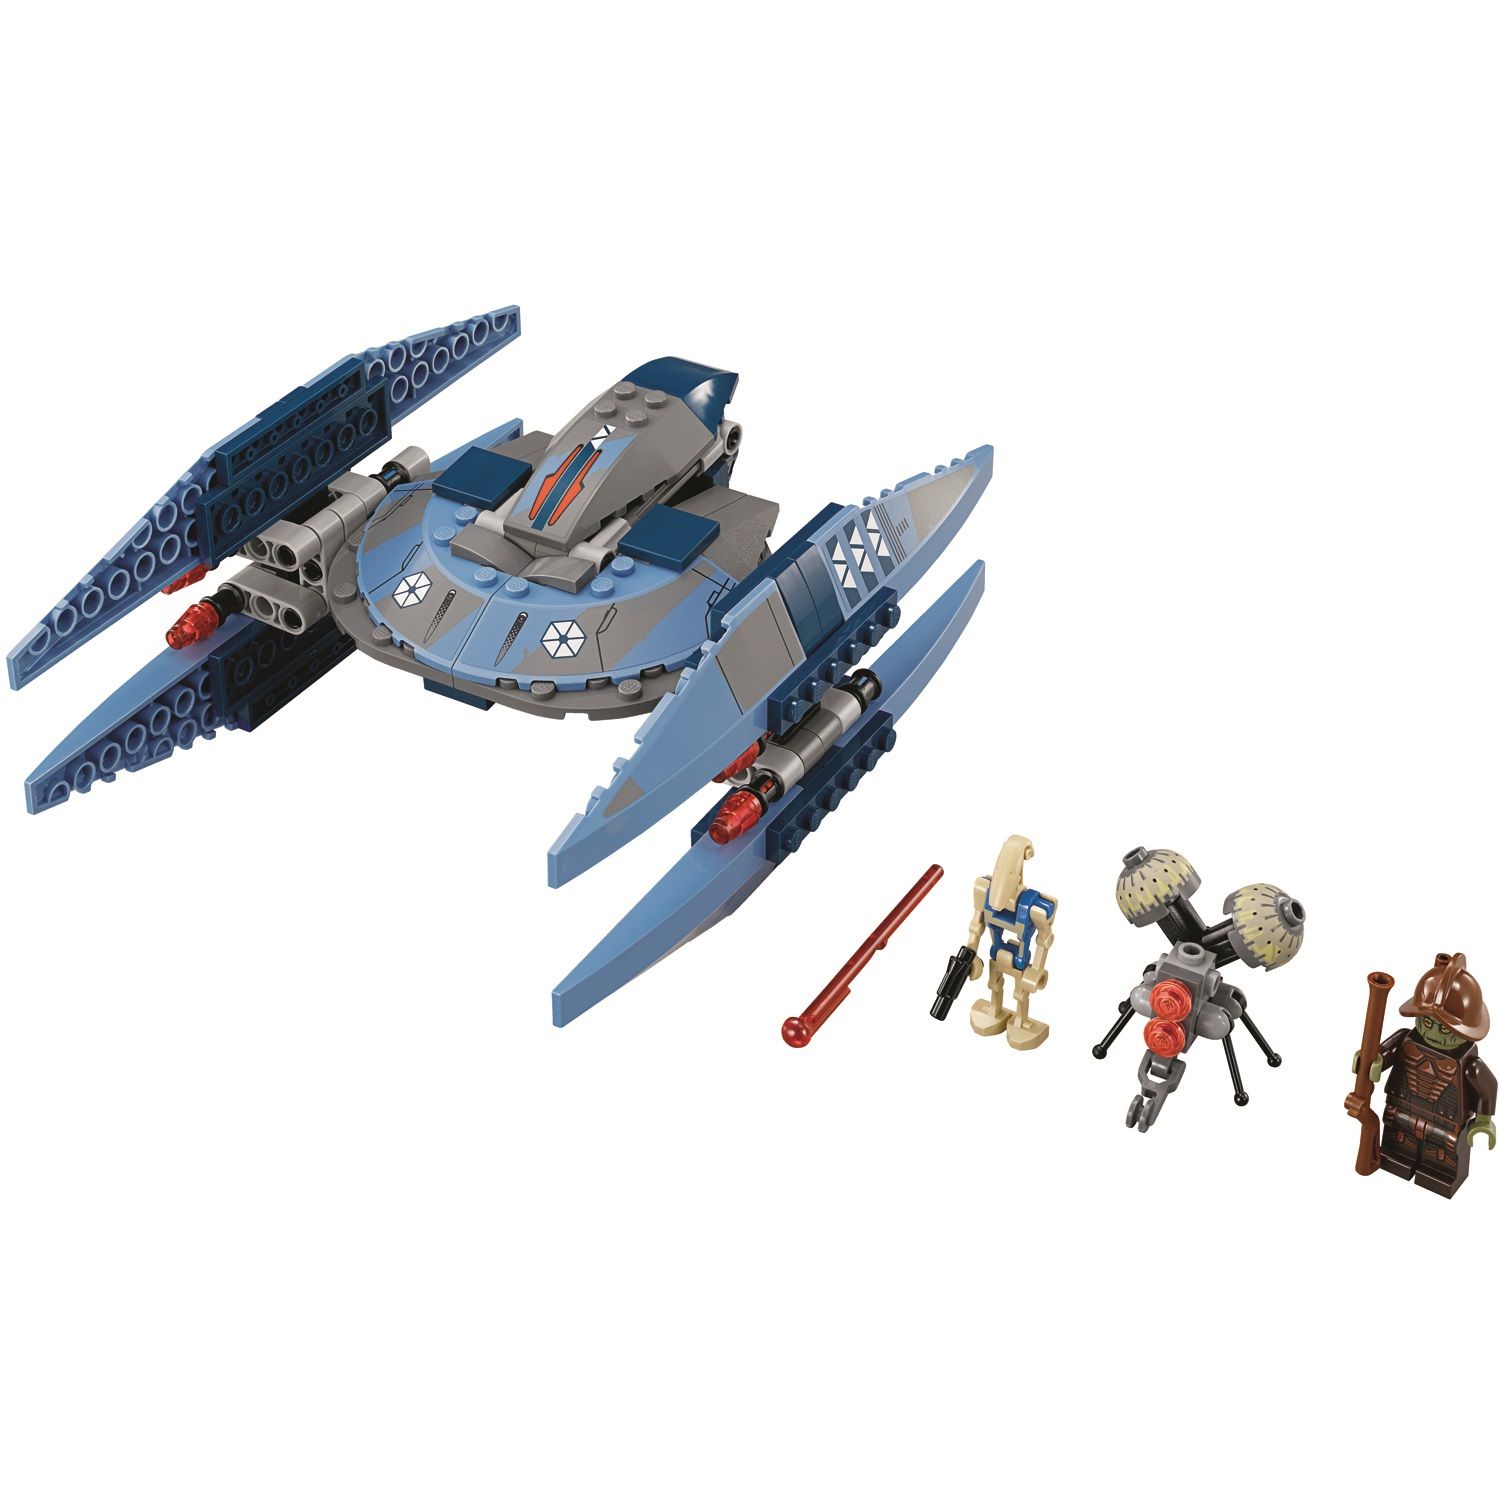  Set de constructie LEGO Star Wars - Vulture Driod 75041 